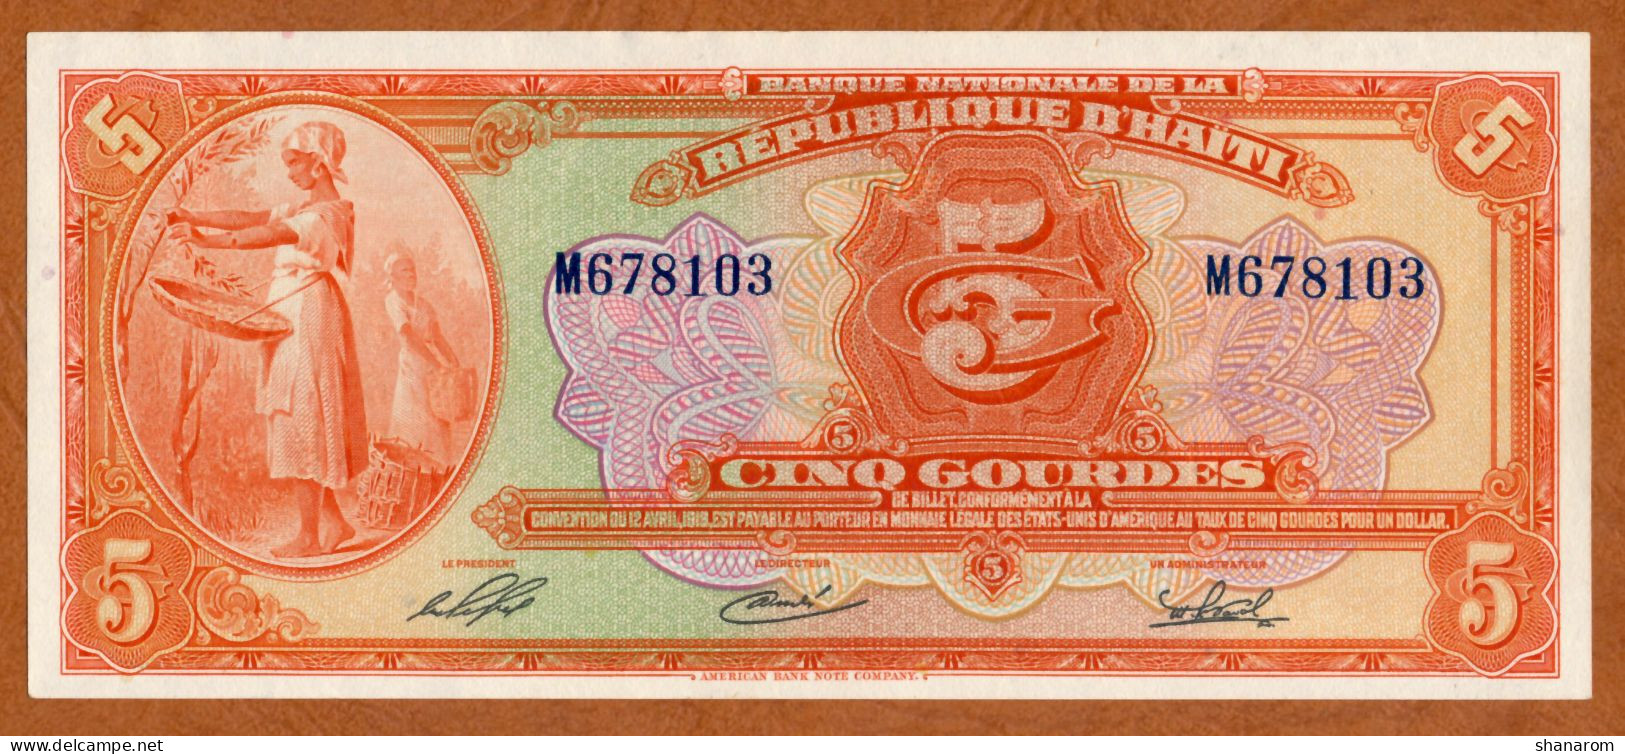 Cayman Islands 1 Dollar 1998 P 21 UNC